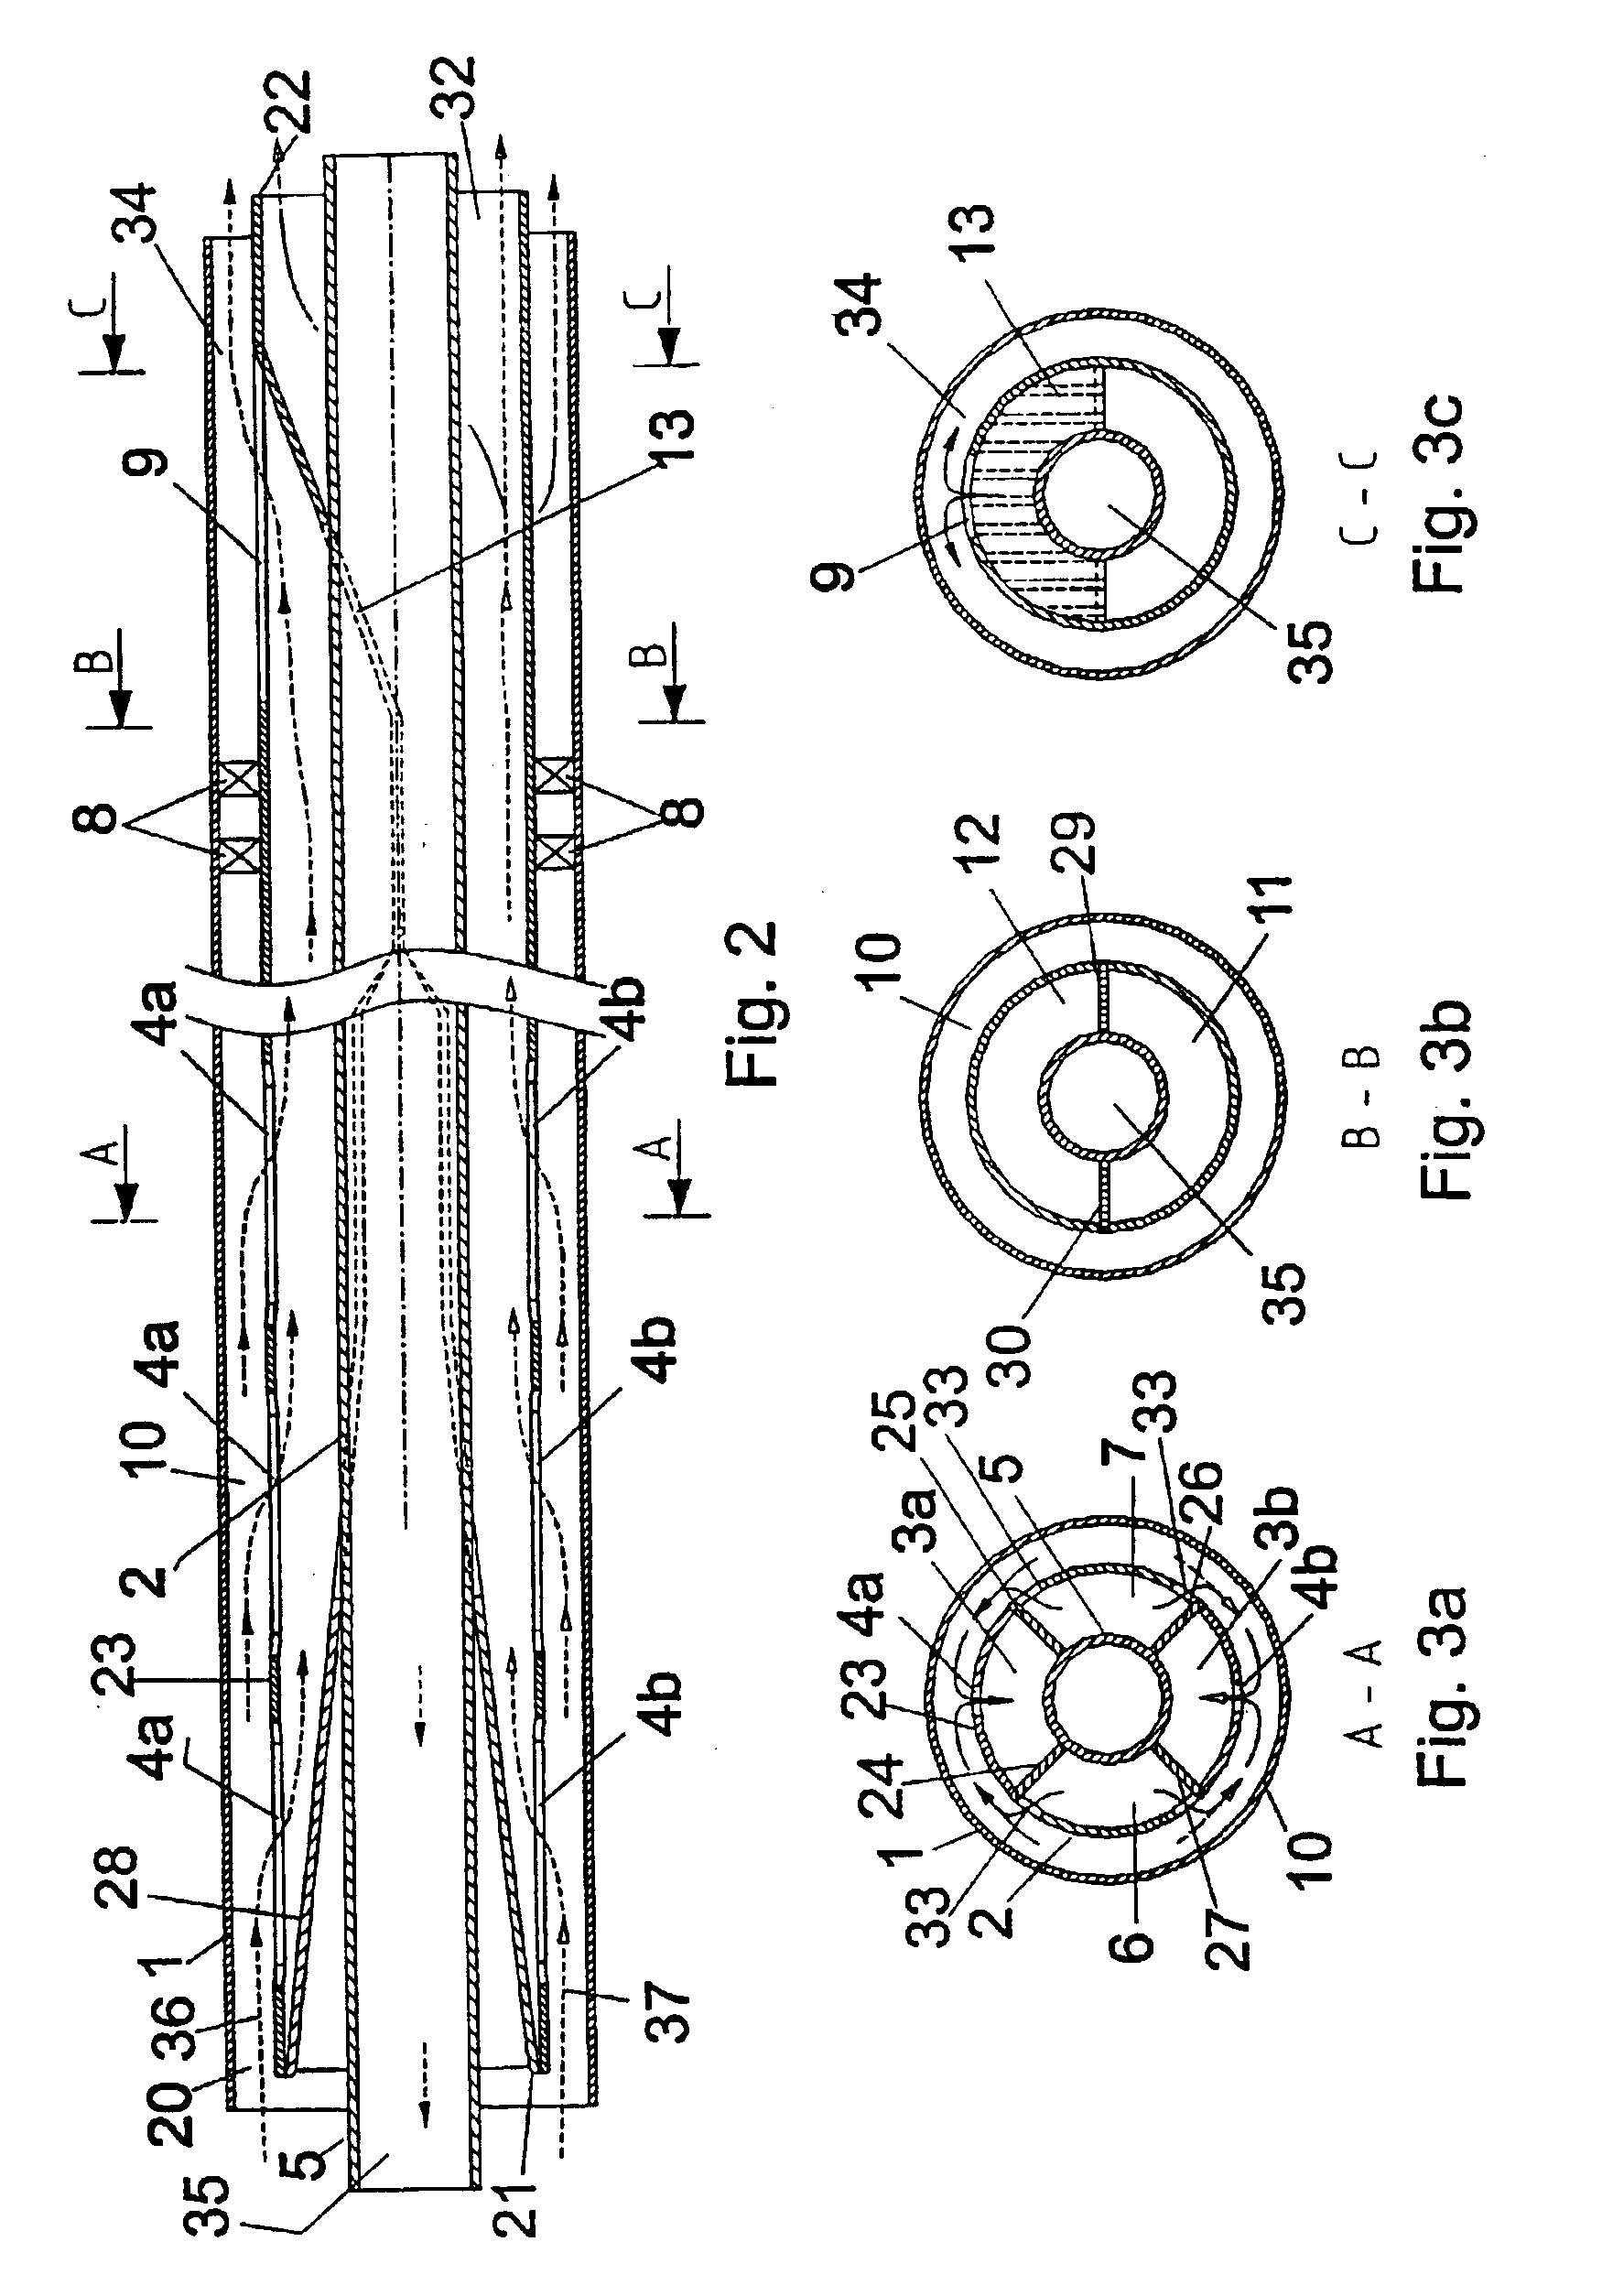 Outlet arrangement for down-hole separator